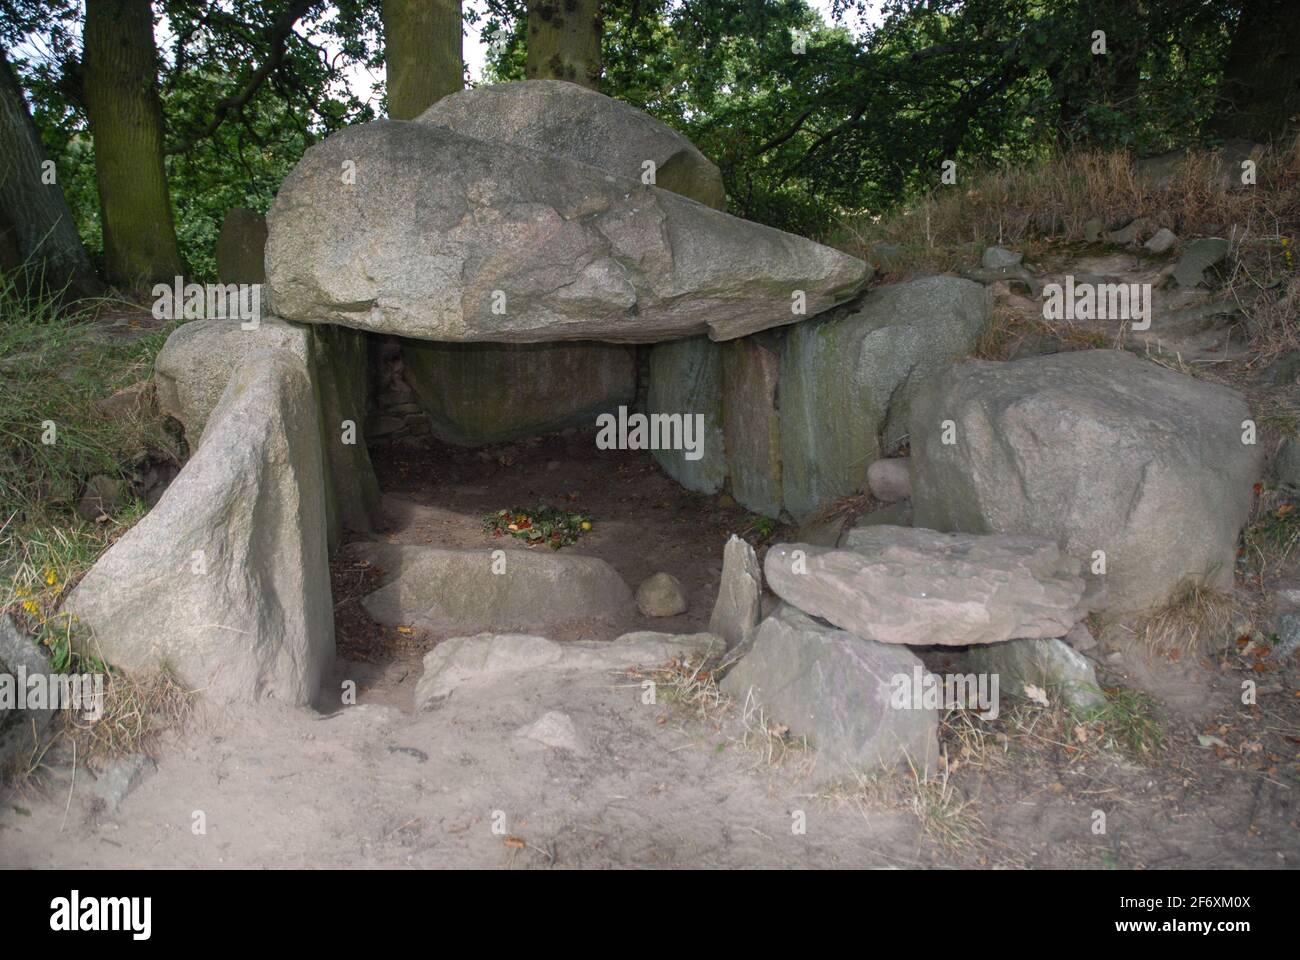 Die Großsteingräber bei Lanken-Granitz auf Rügen stammen aus der Jungsteinzeit - los dólmenes en Lanken-Granitz en la isla de Ruegen se remontan a. El Neolítico Foto de stock